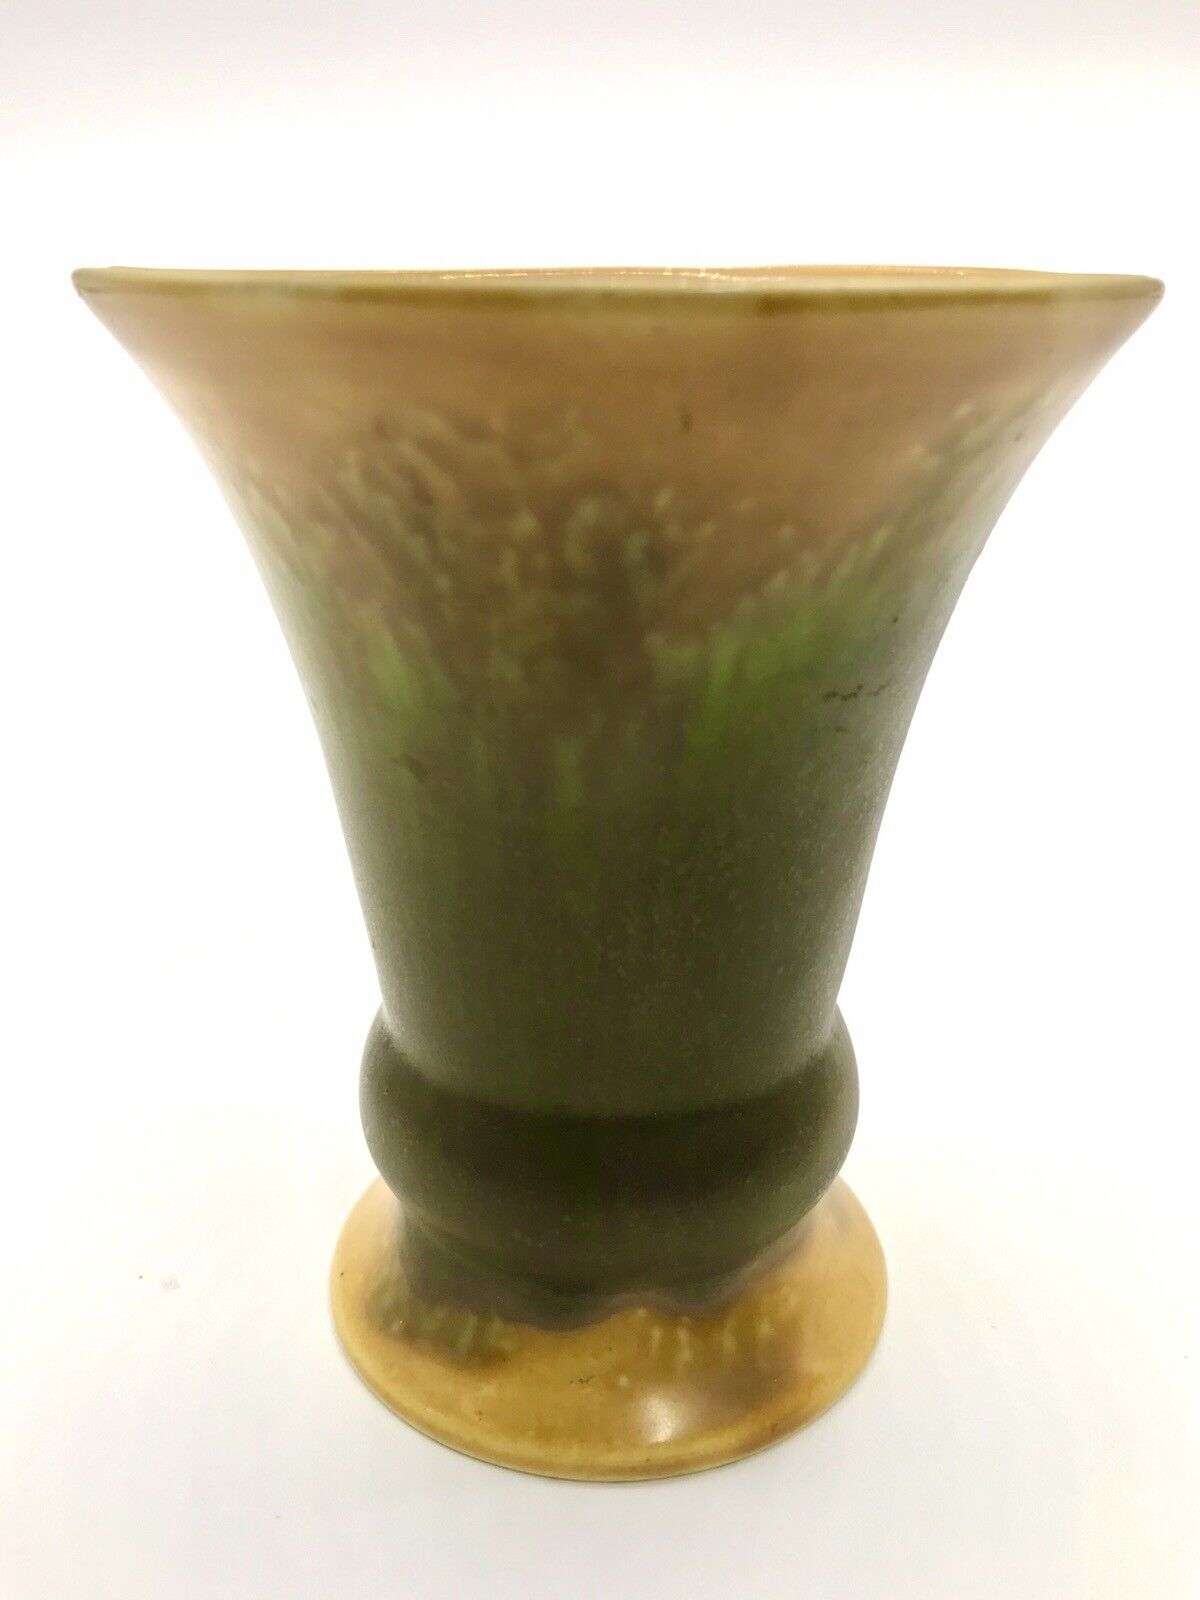 1930's Empire Ware England Art Pottery Ceramic Vase Yellow Green Drip Glaze